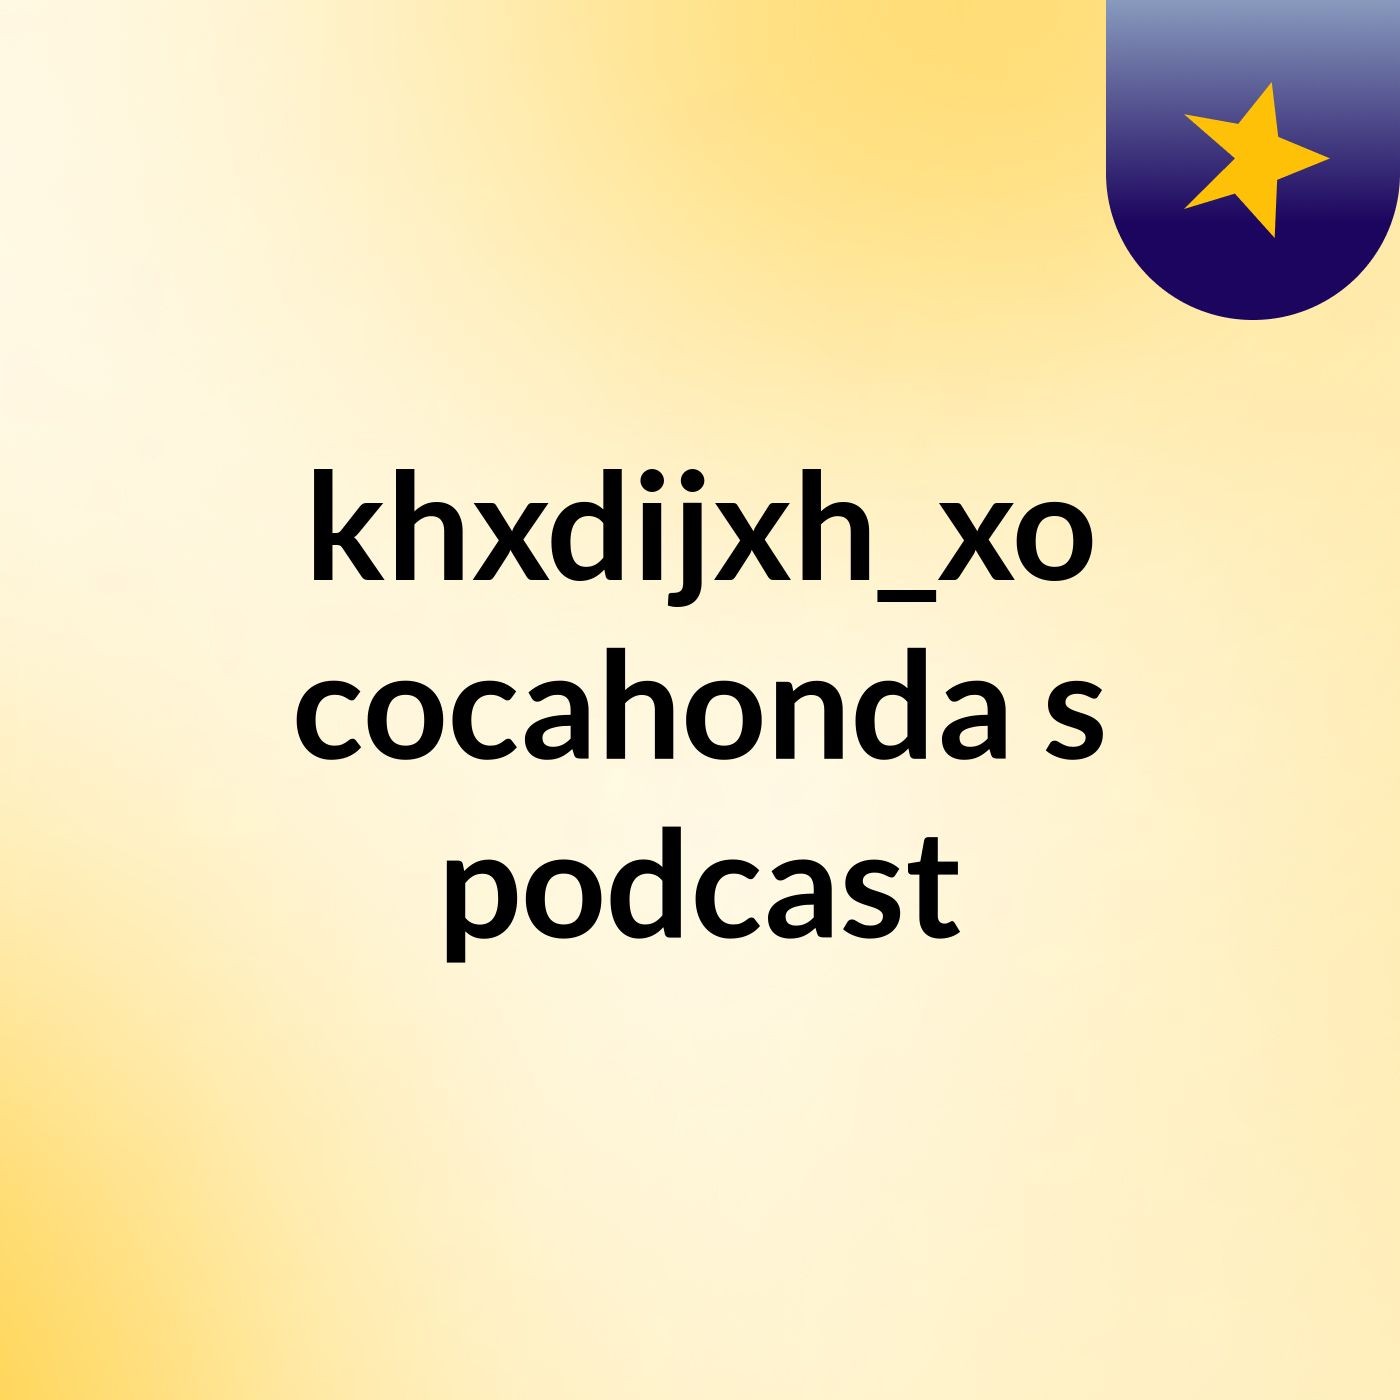 Episode 2 - khxdijxh_xo cocahonda's podcast